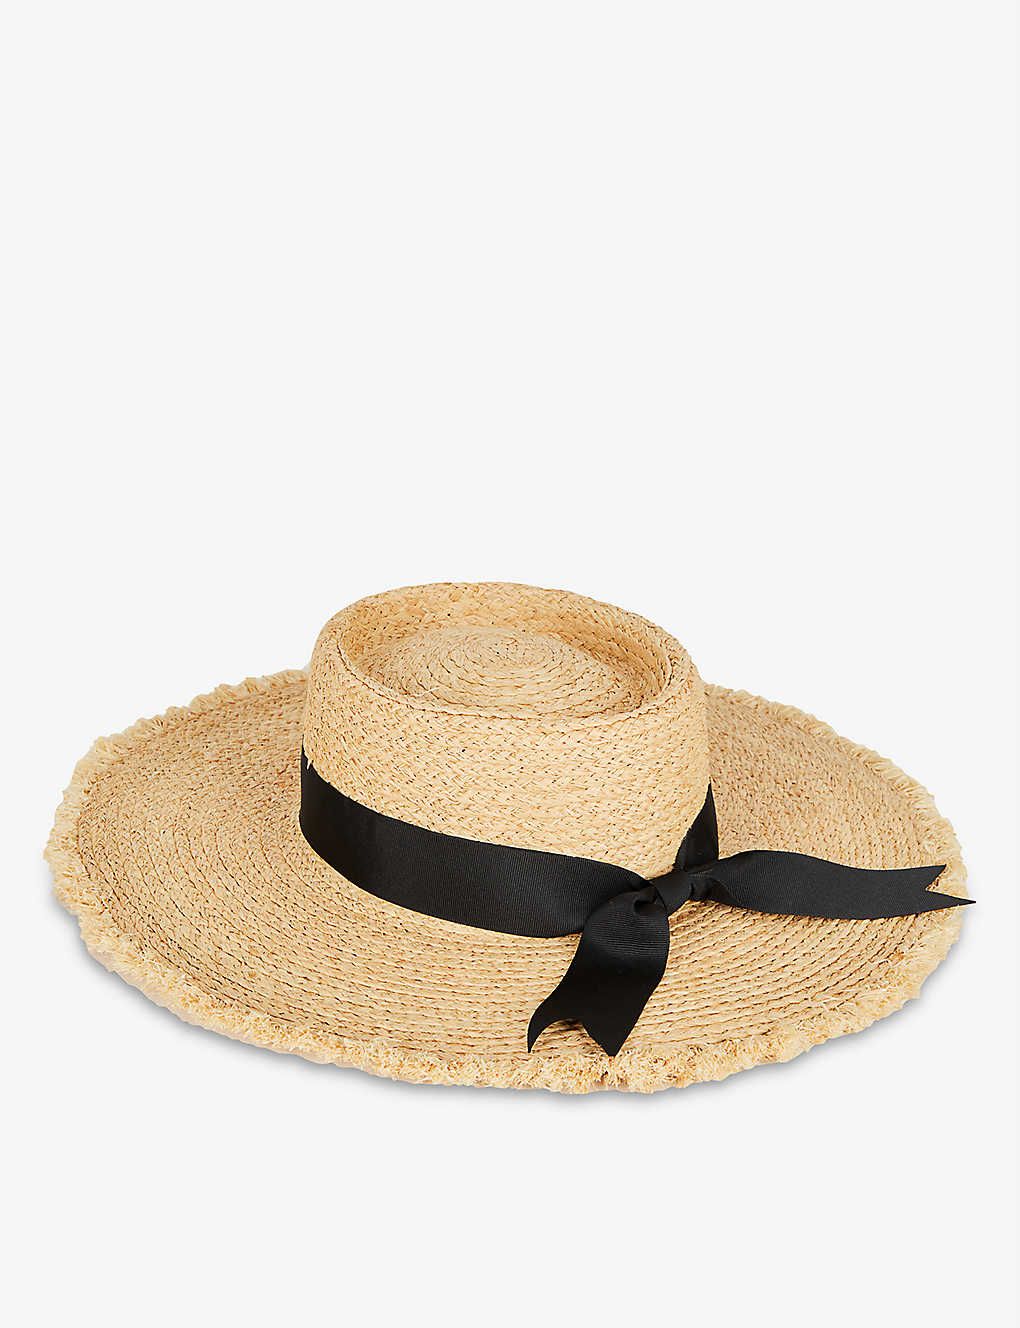 Ventura grosgrain-trimmed straw hat | Selfridges